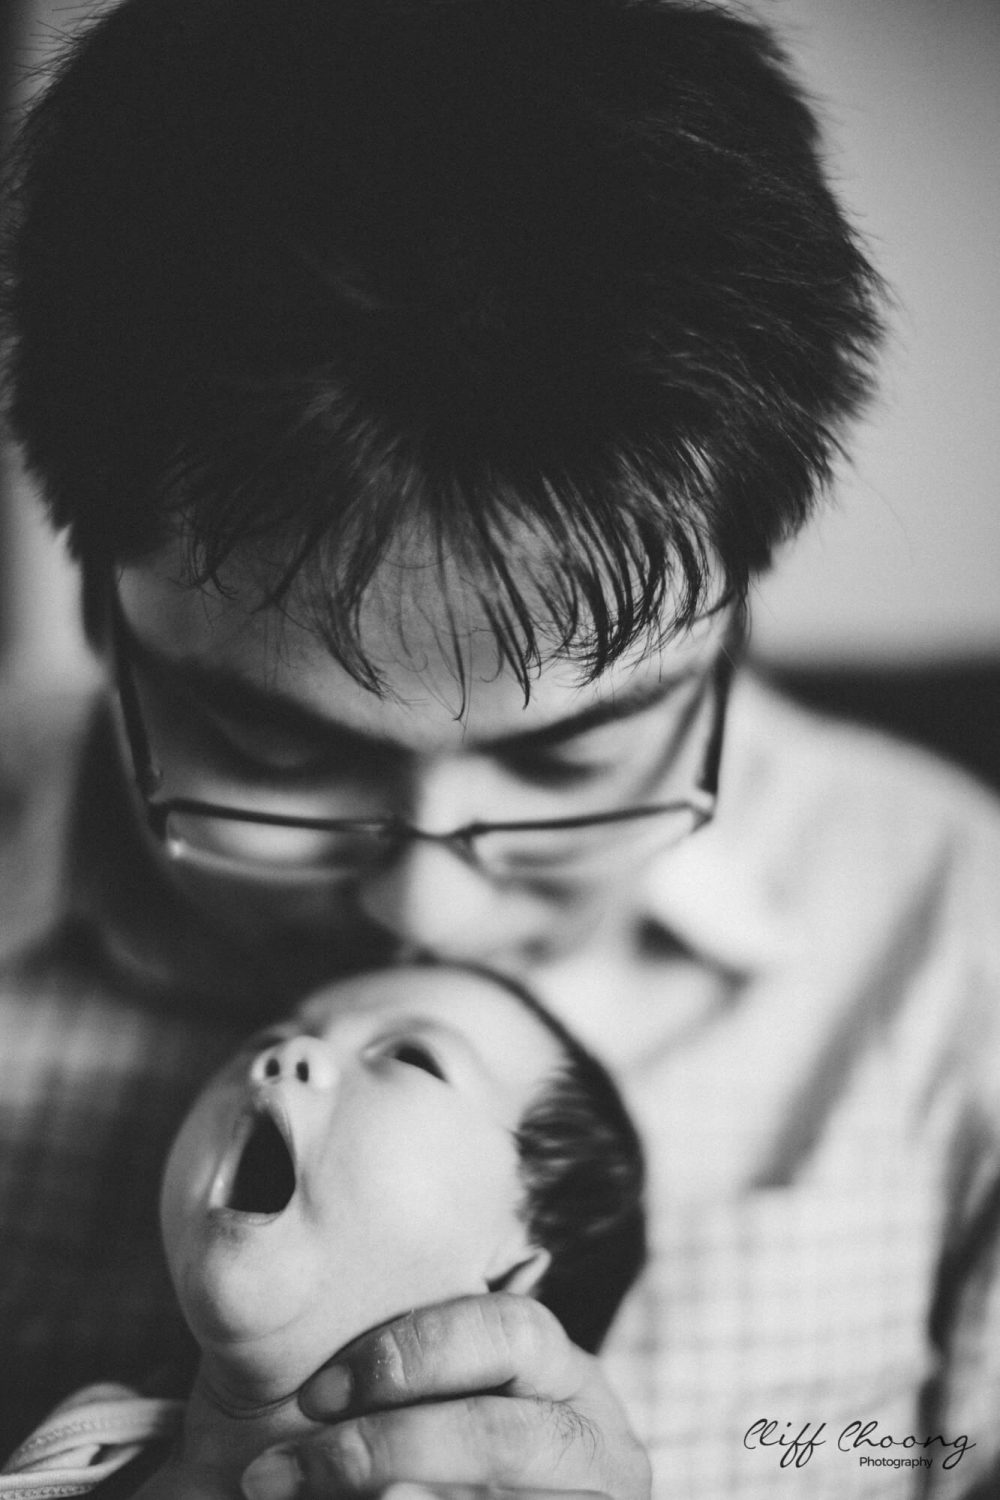 Newborn Baby portrait Malaysia Photographer Cliff Choong